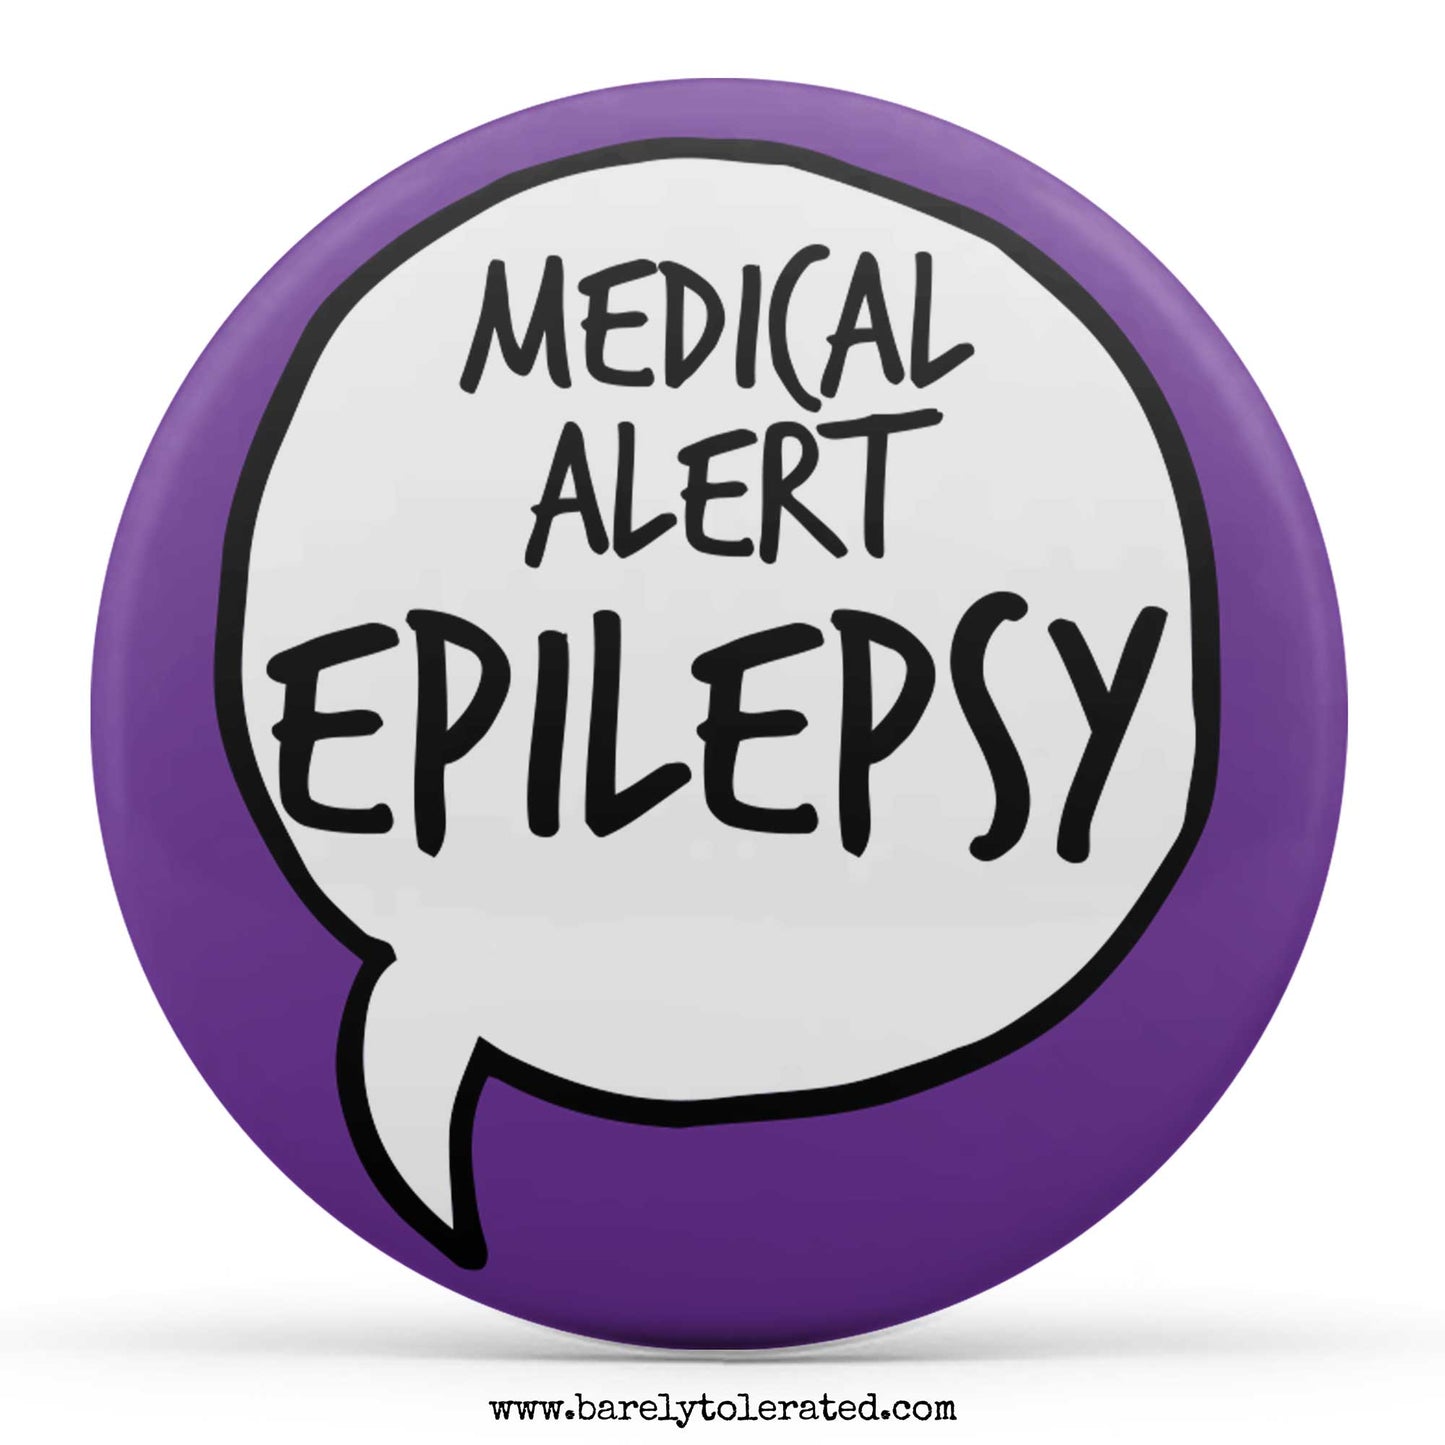 Medical Alert Epilepsy